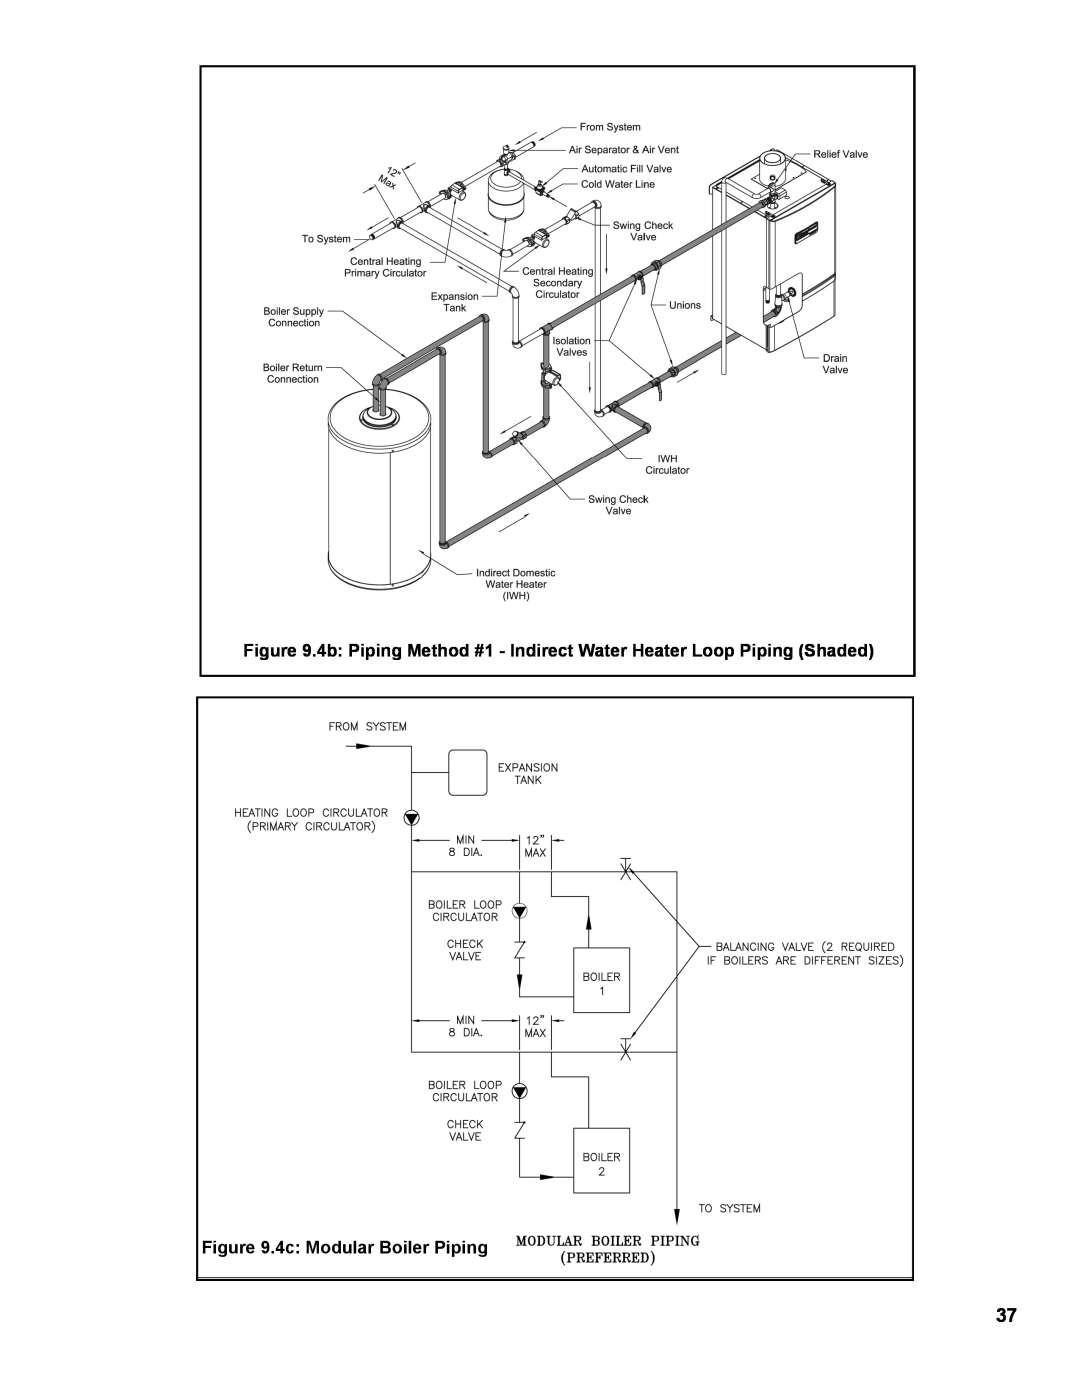 Burnham 101008-01R1-2/07 manual 4c Modular Boiler Piping 